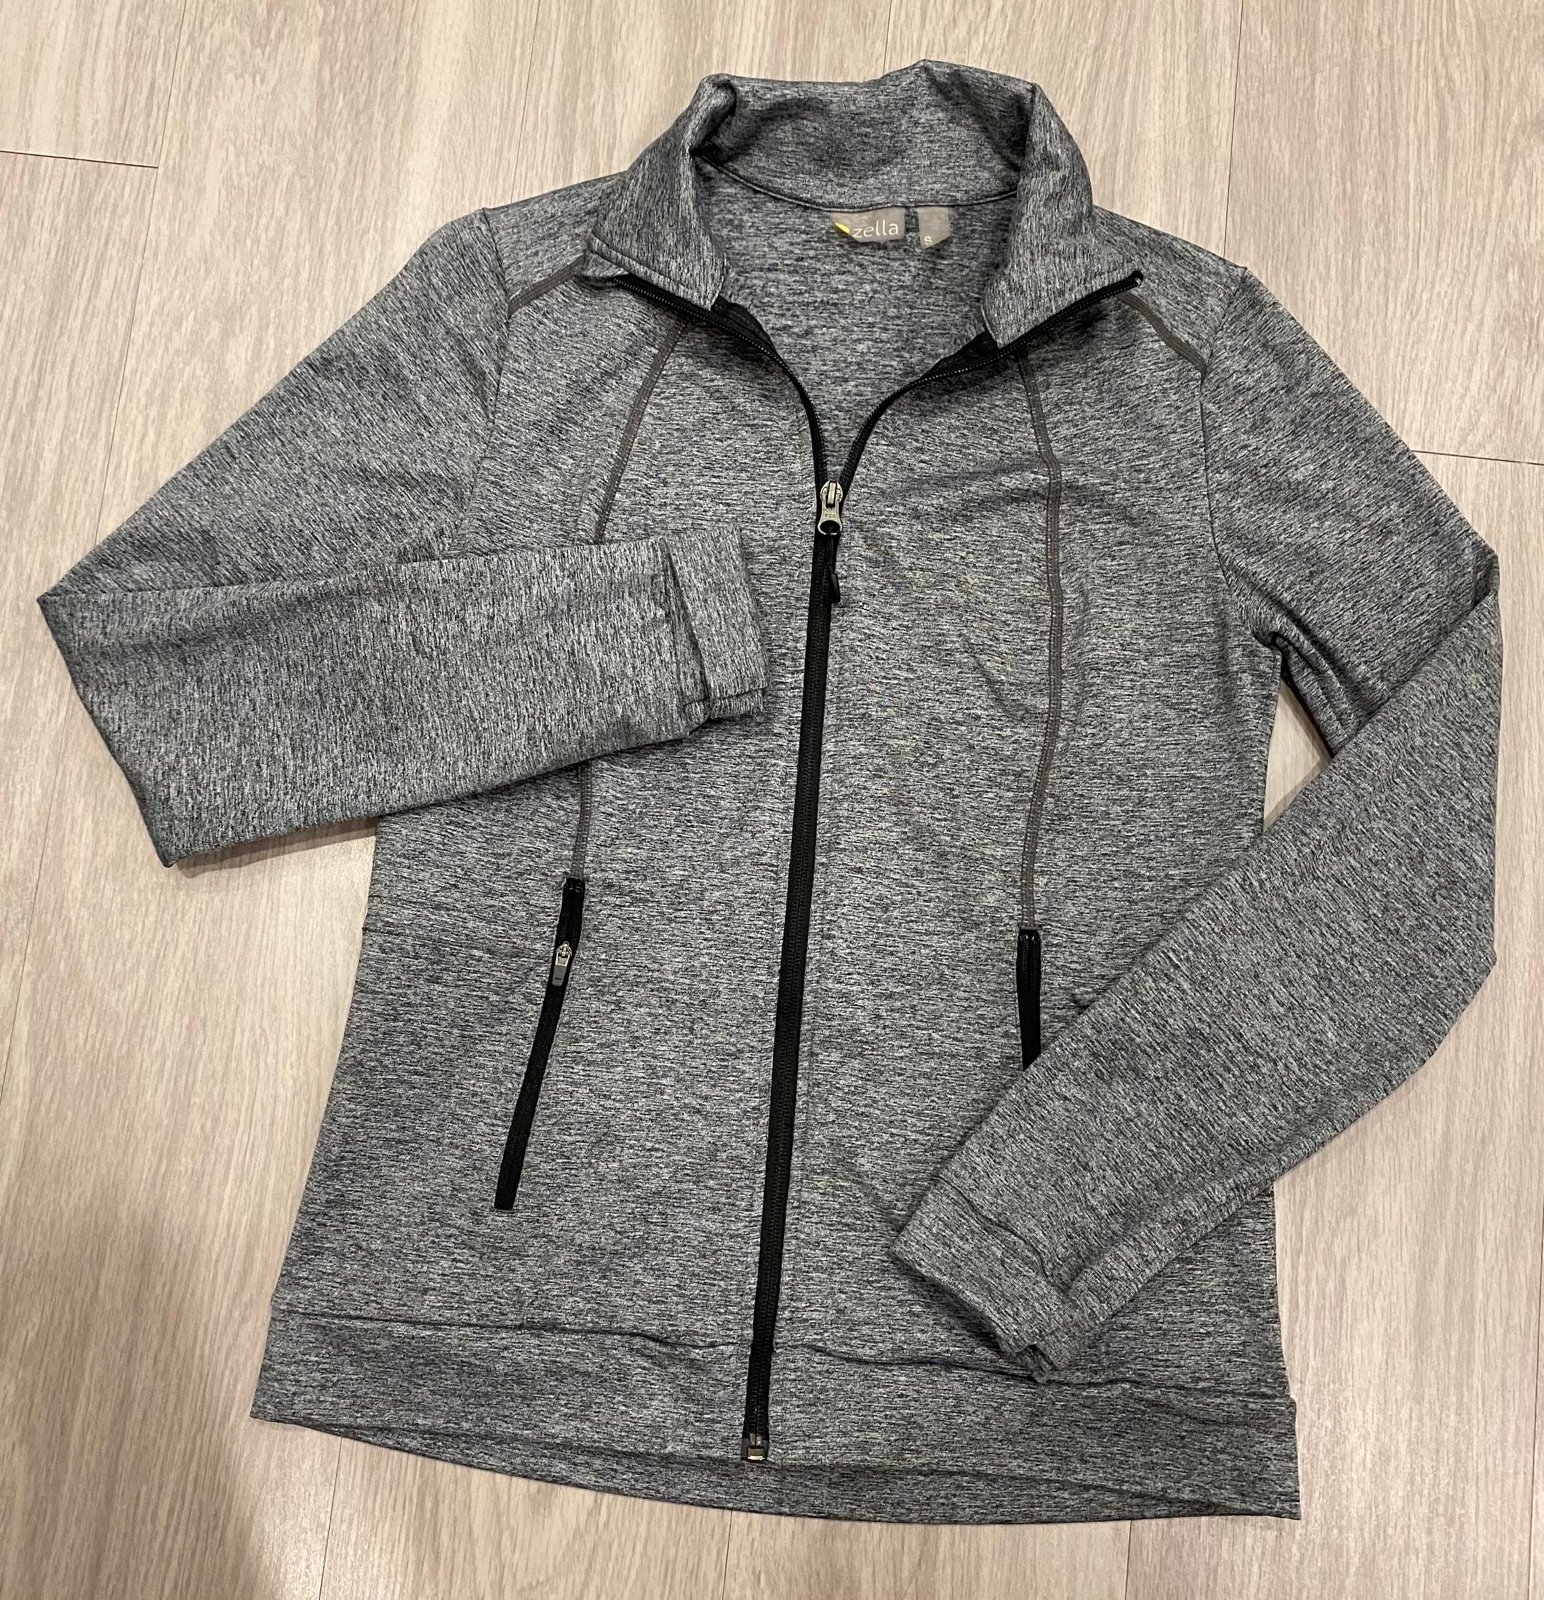 ZELLA Black Heathered Gray Thumb Hole Full Zip Up Athletic Jacket Yoga Small S 7KgGbaC9C